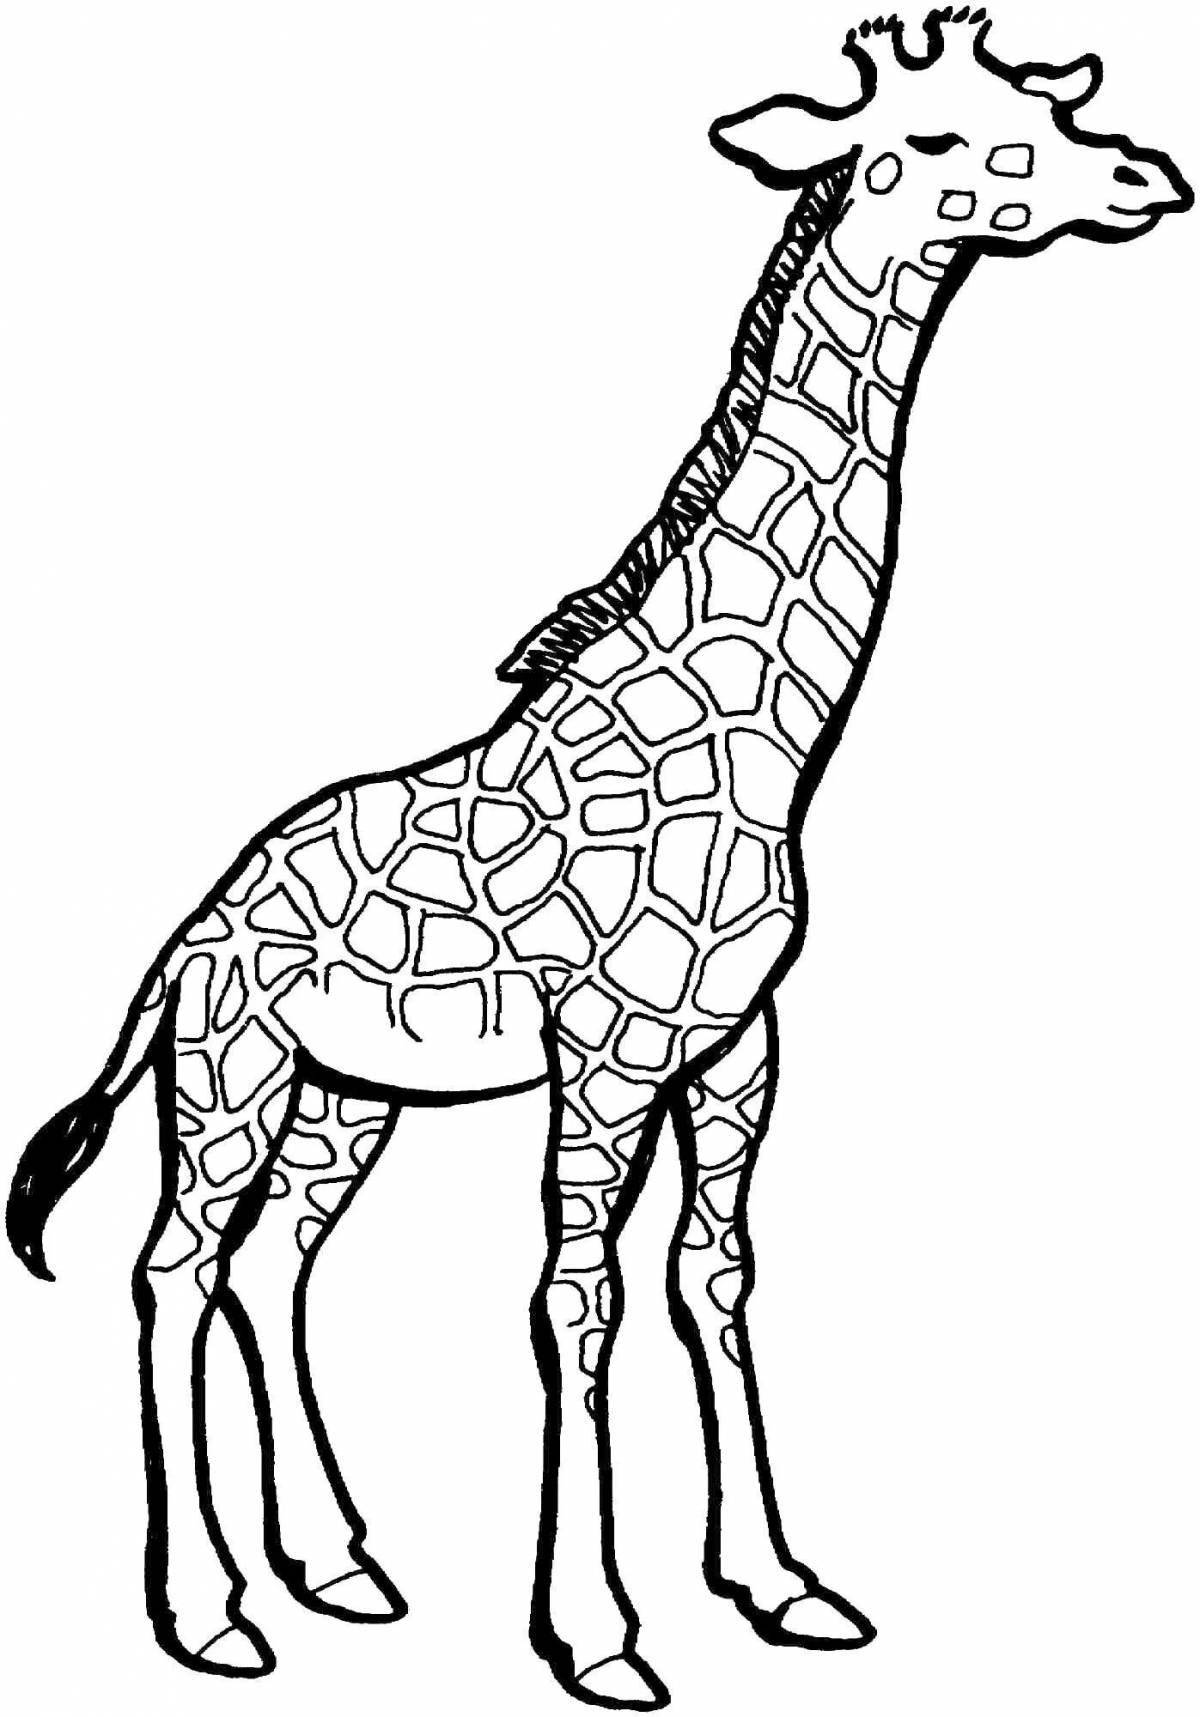 Violent giraffe coloring book for kids